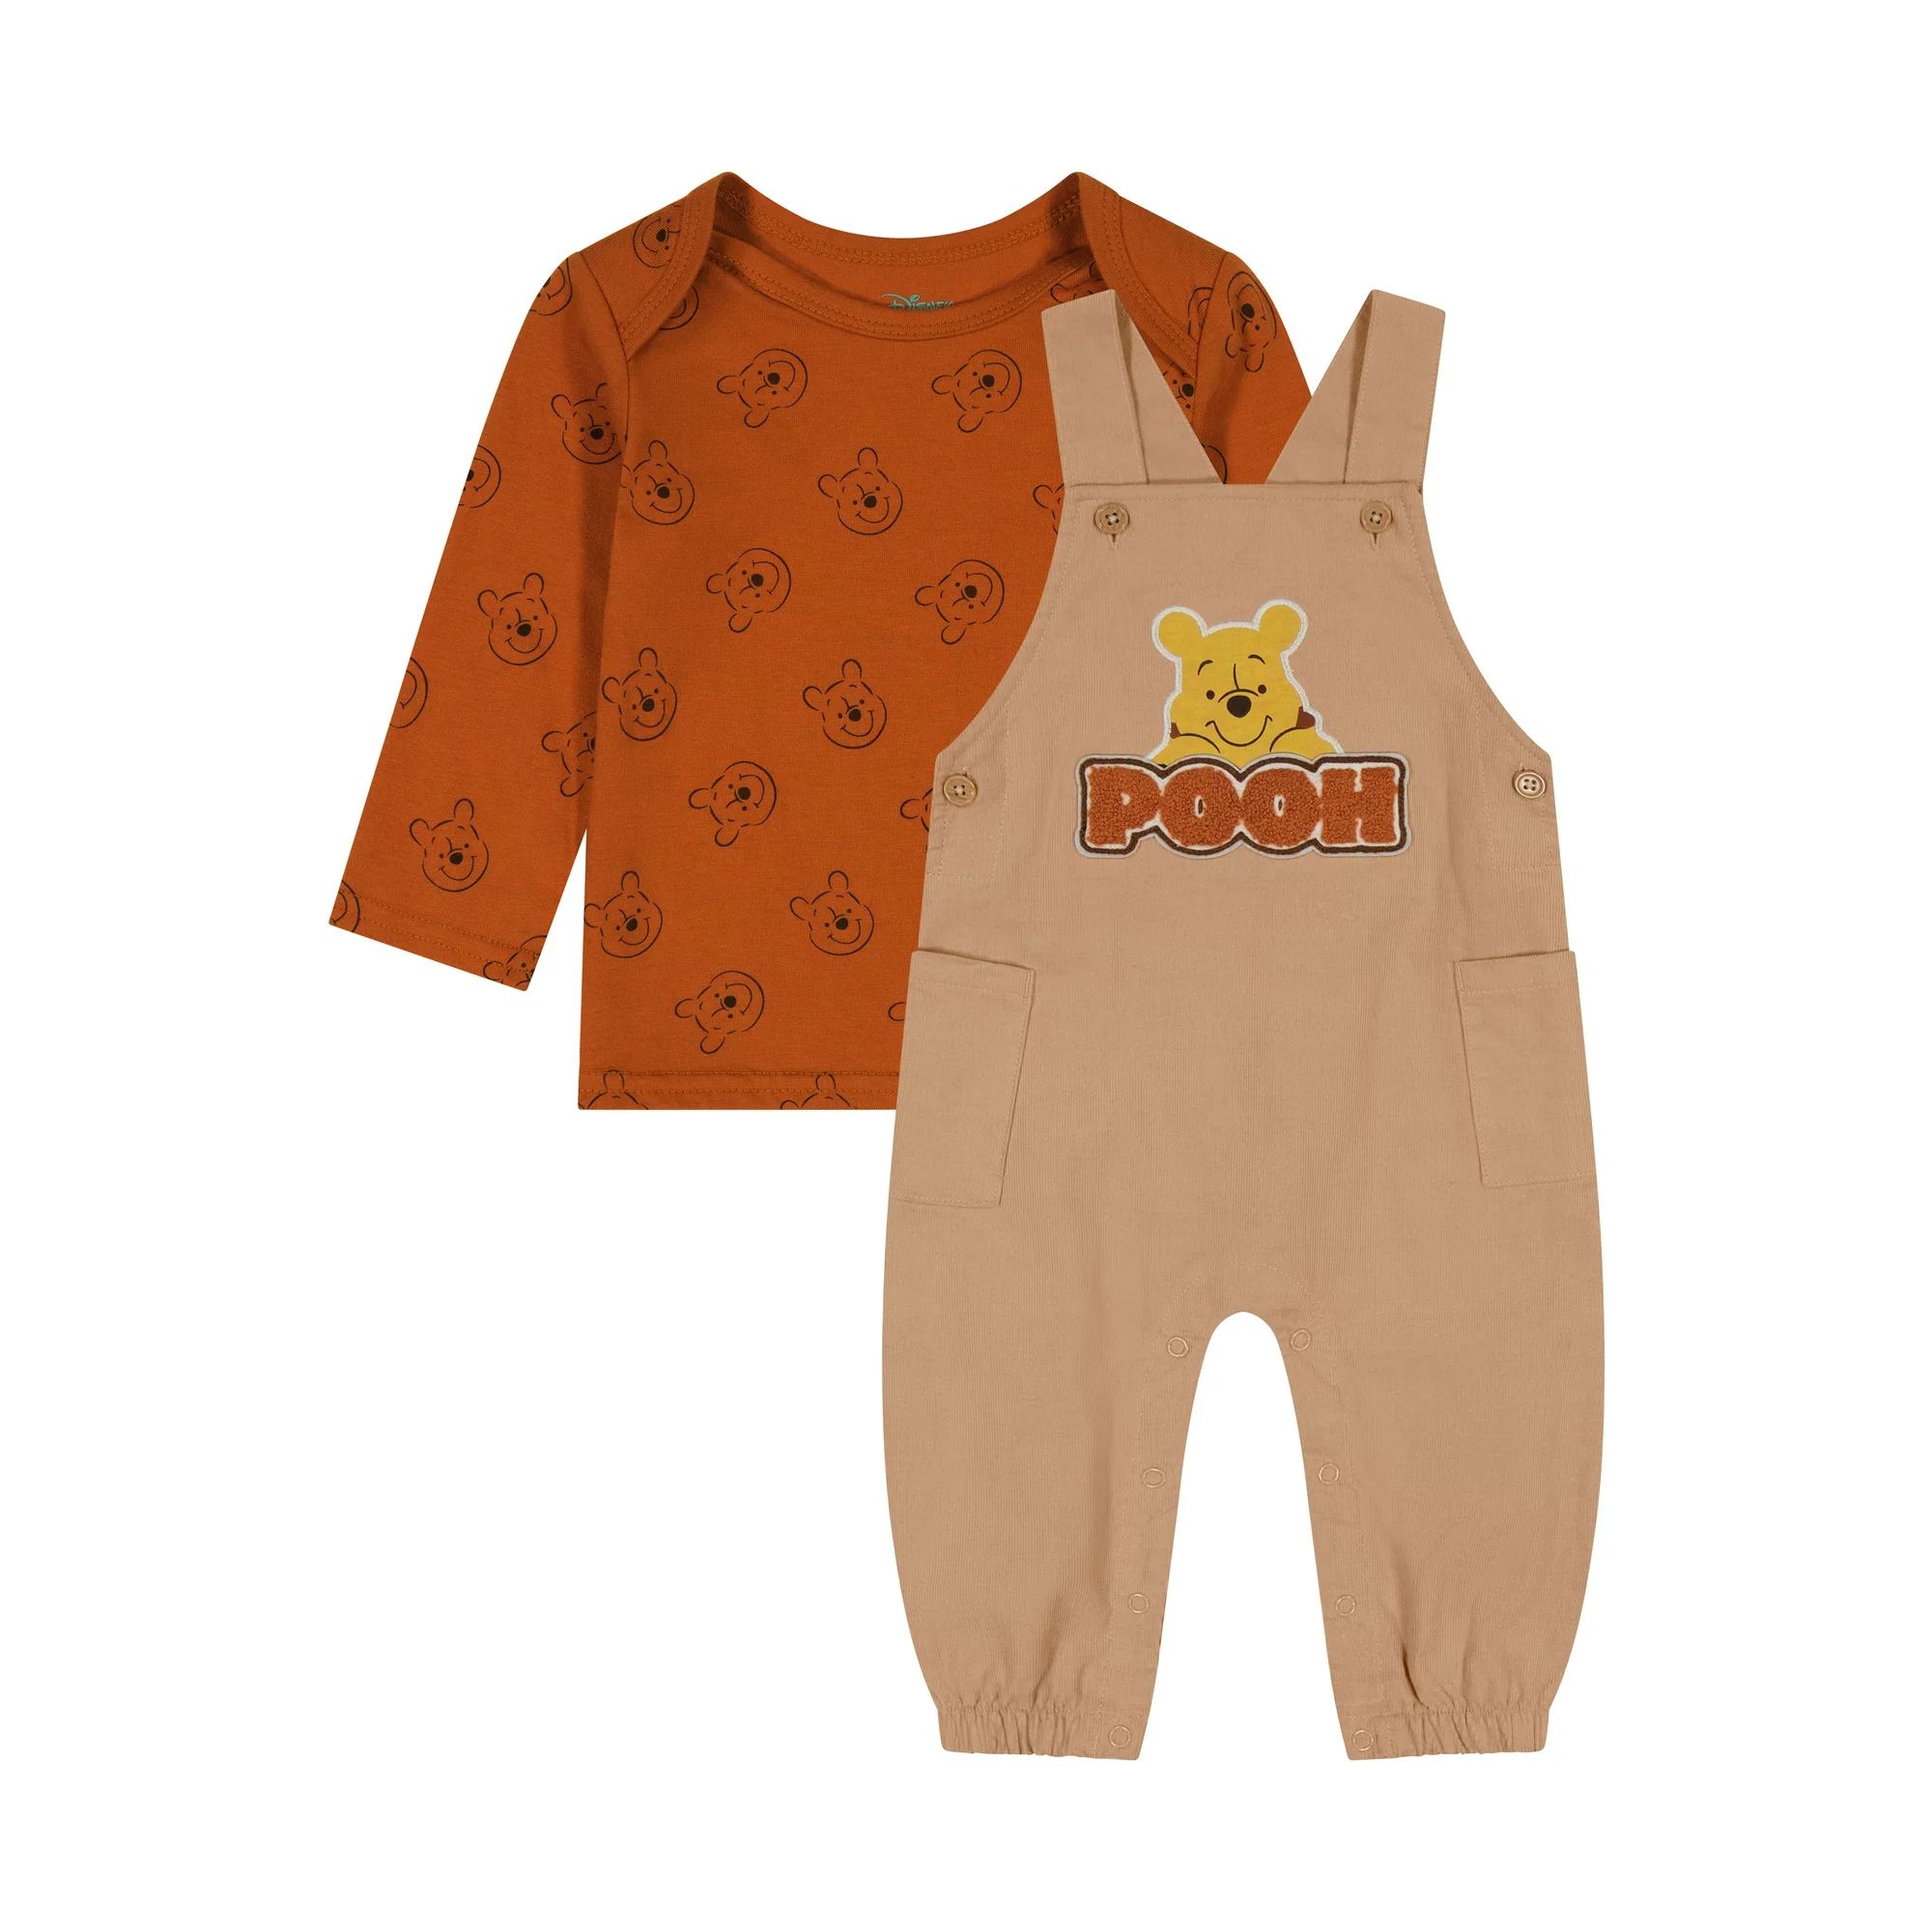 Winnie The Pooh Baby Boy Overall Set, Sizes 0/3 Months - 24 Months | Walmart (US)